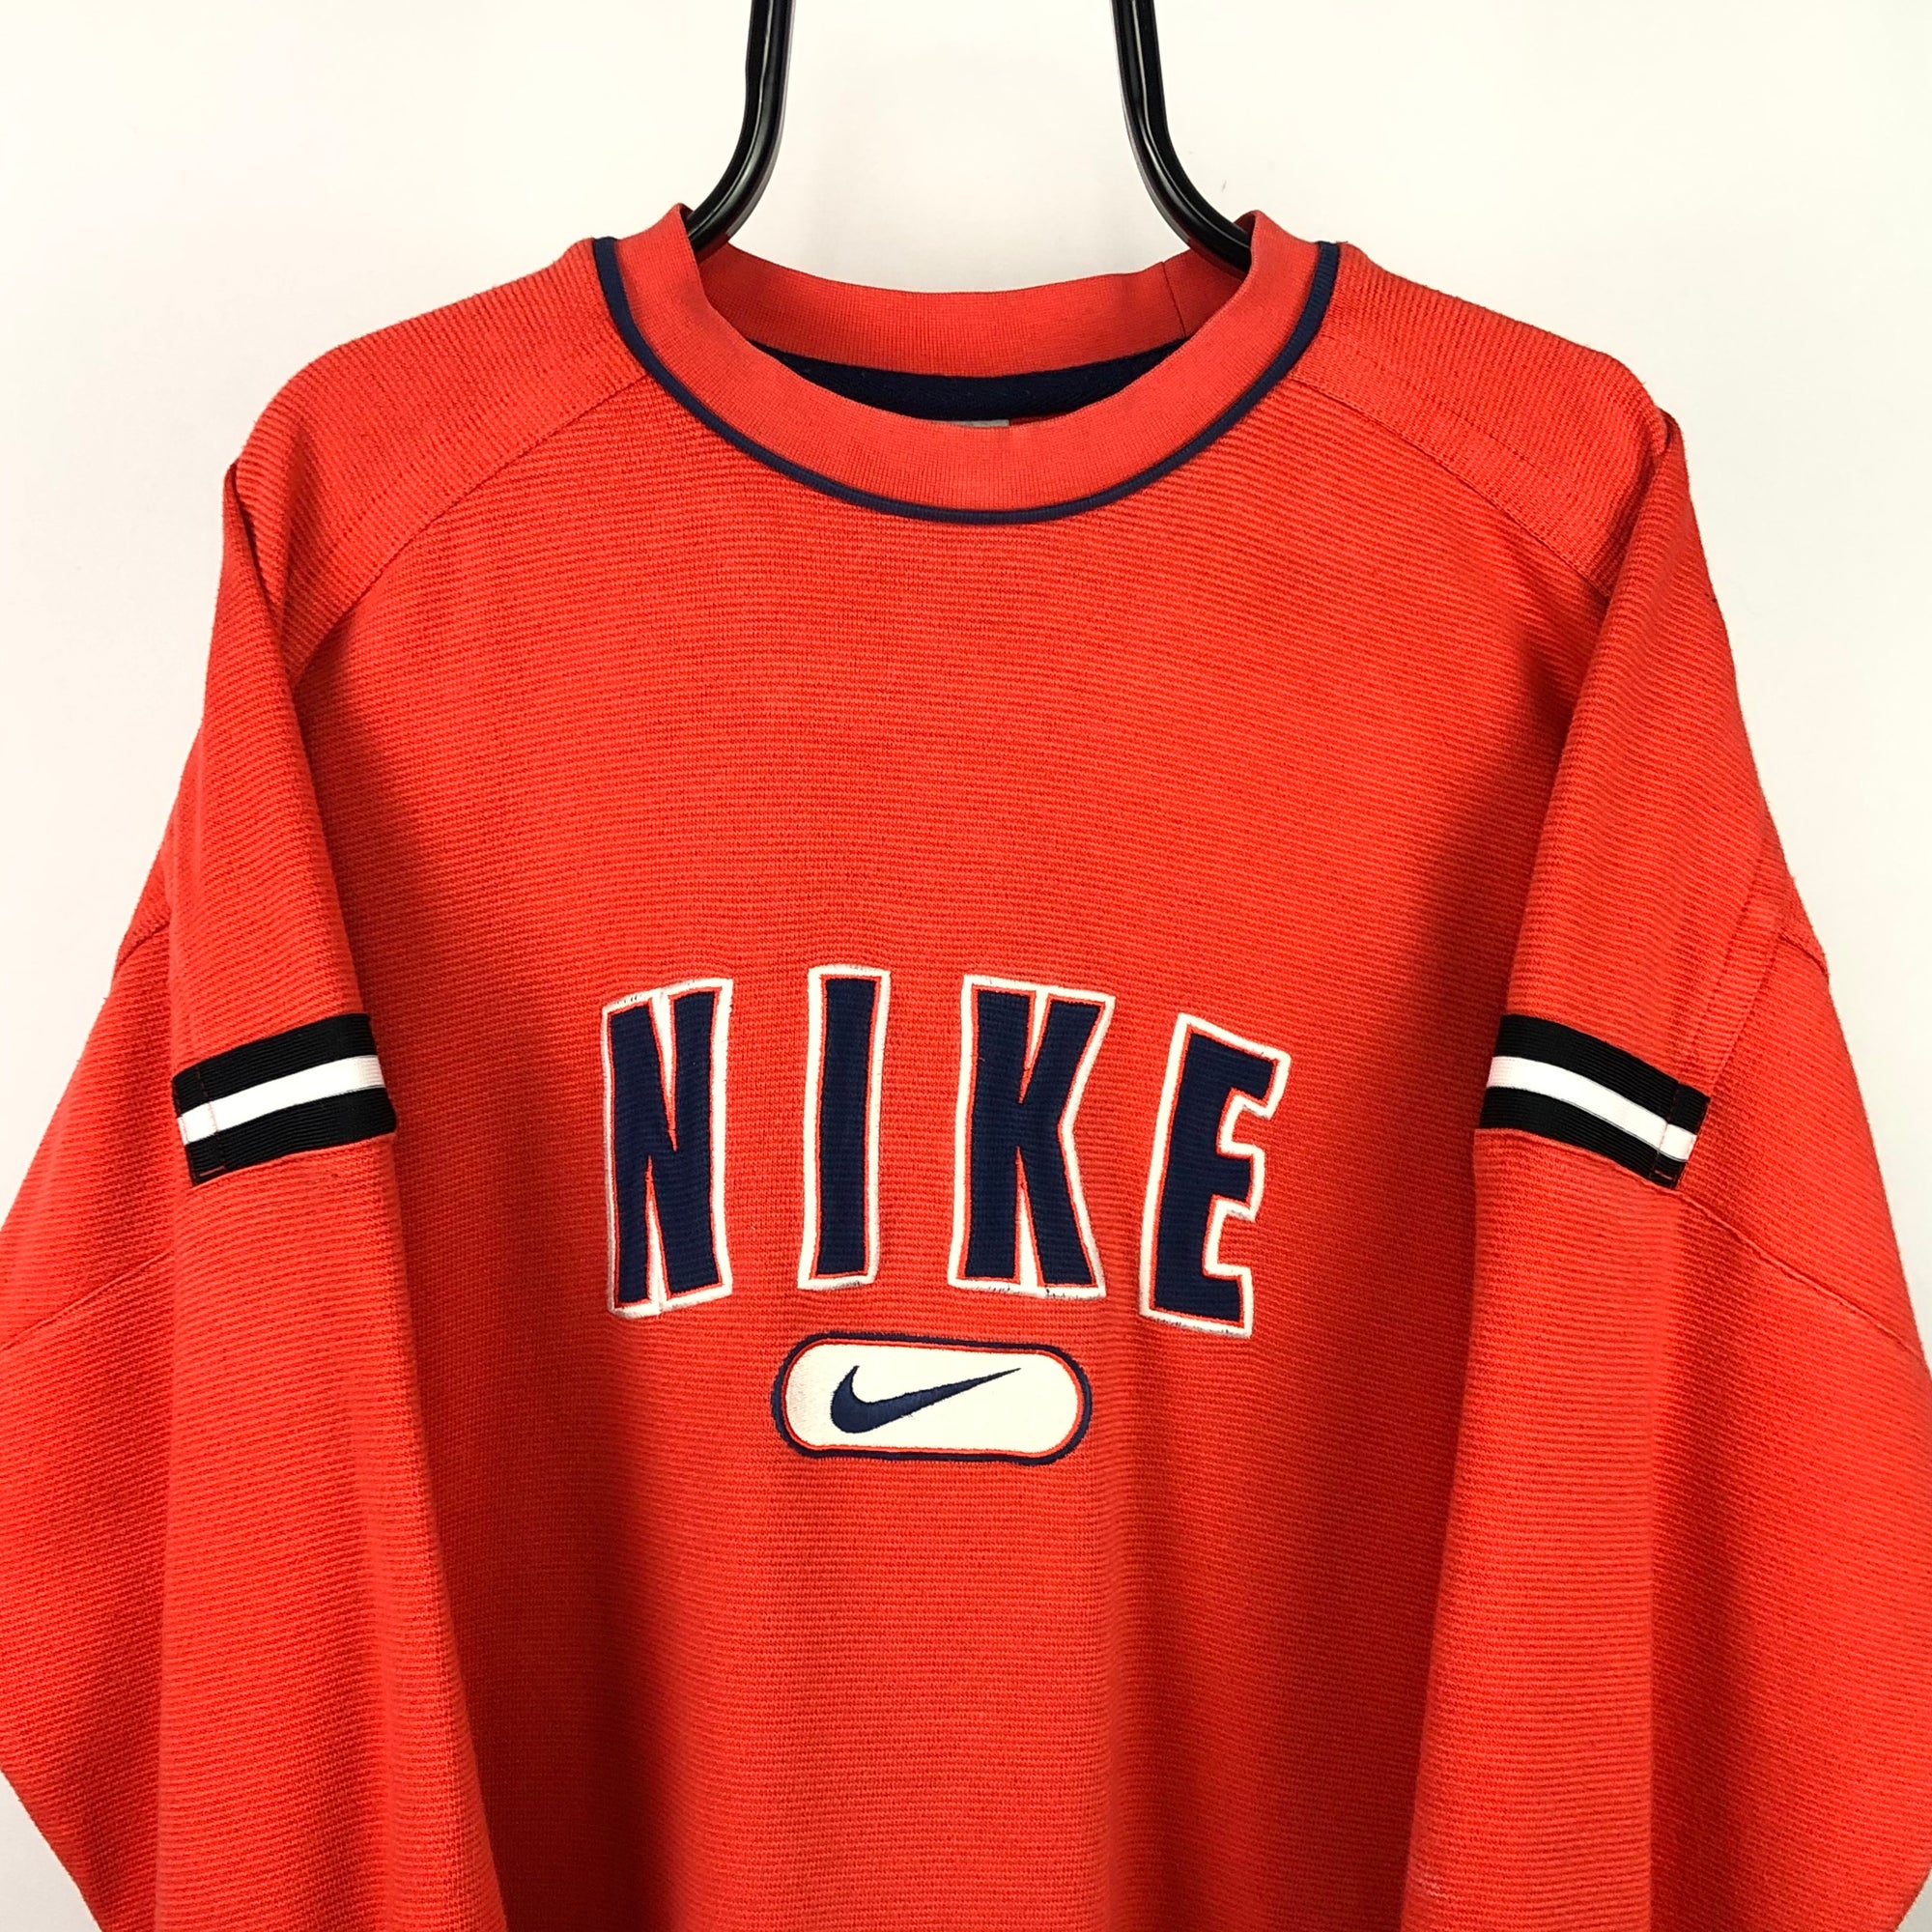 Vintage 90s Nike Spellout Sweatshirt in Orange/Navy - Men's Large/Women's XL